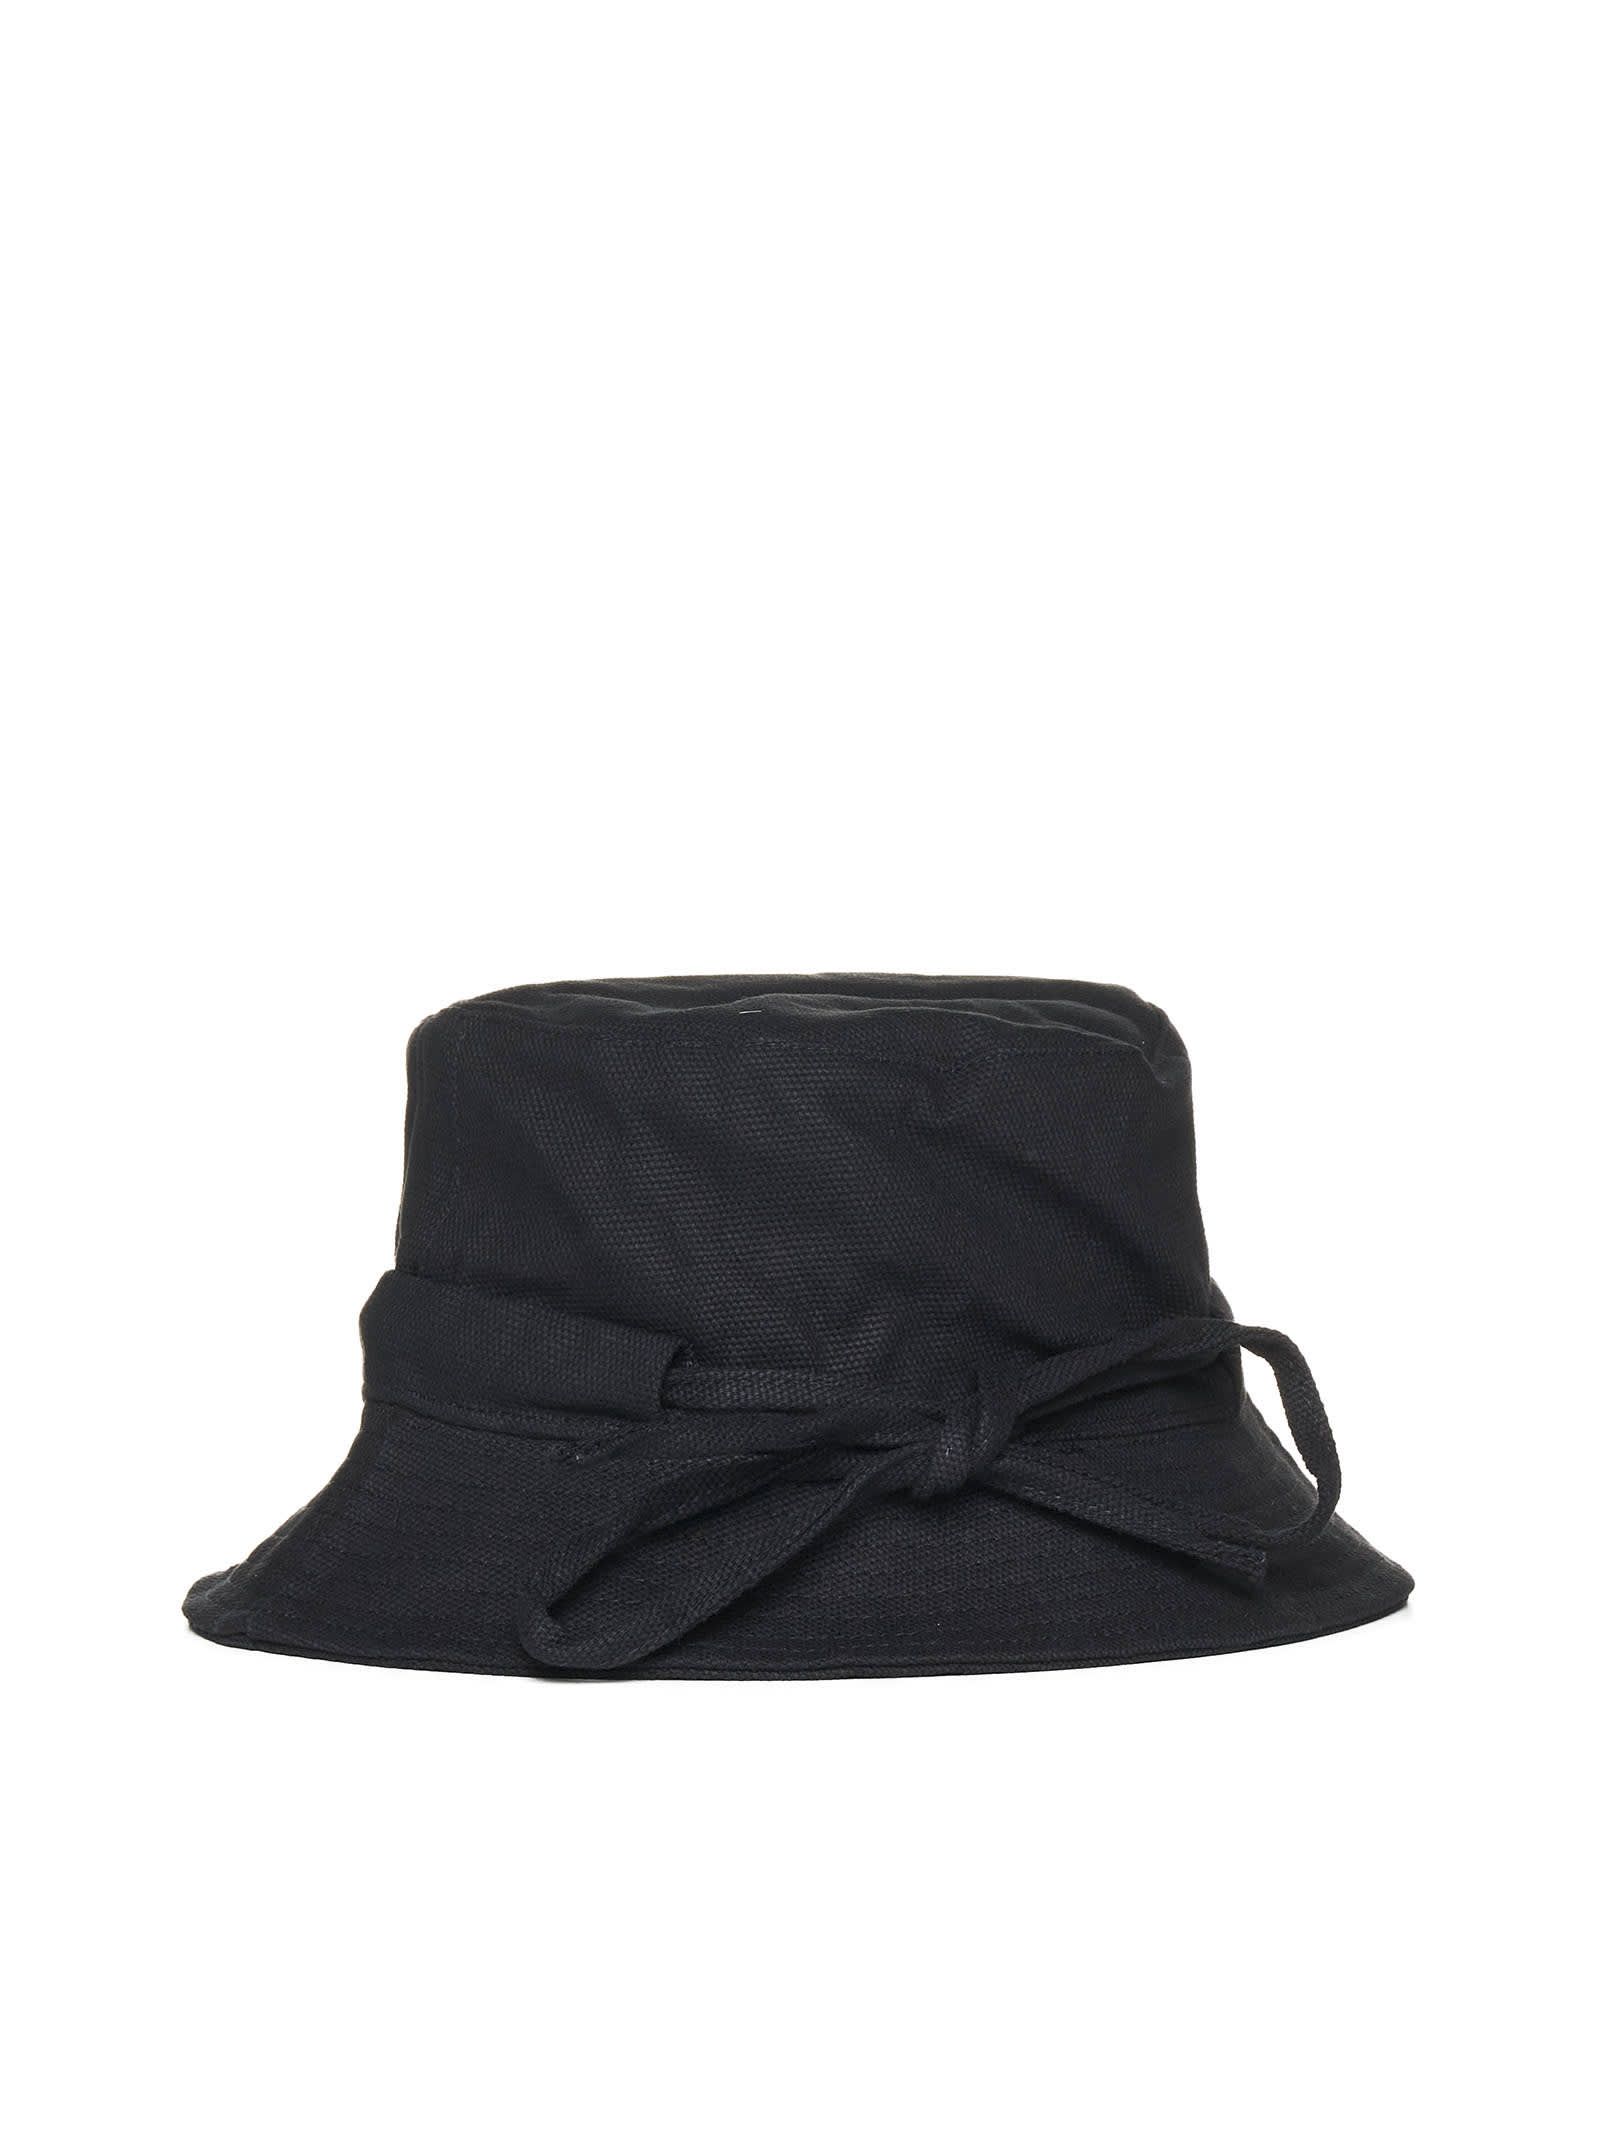 Shop Jacquemus Hat In Black